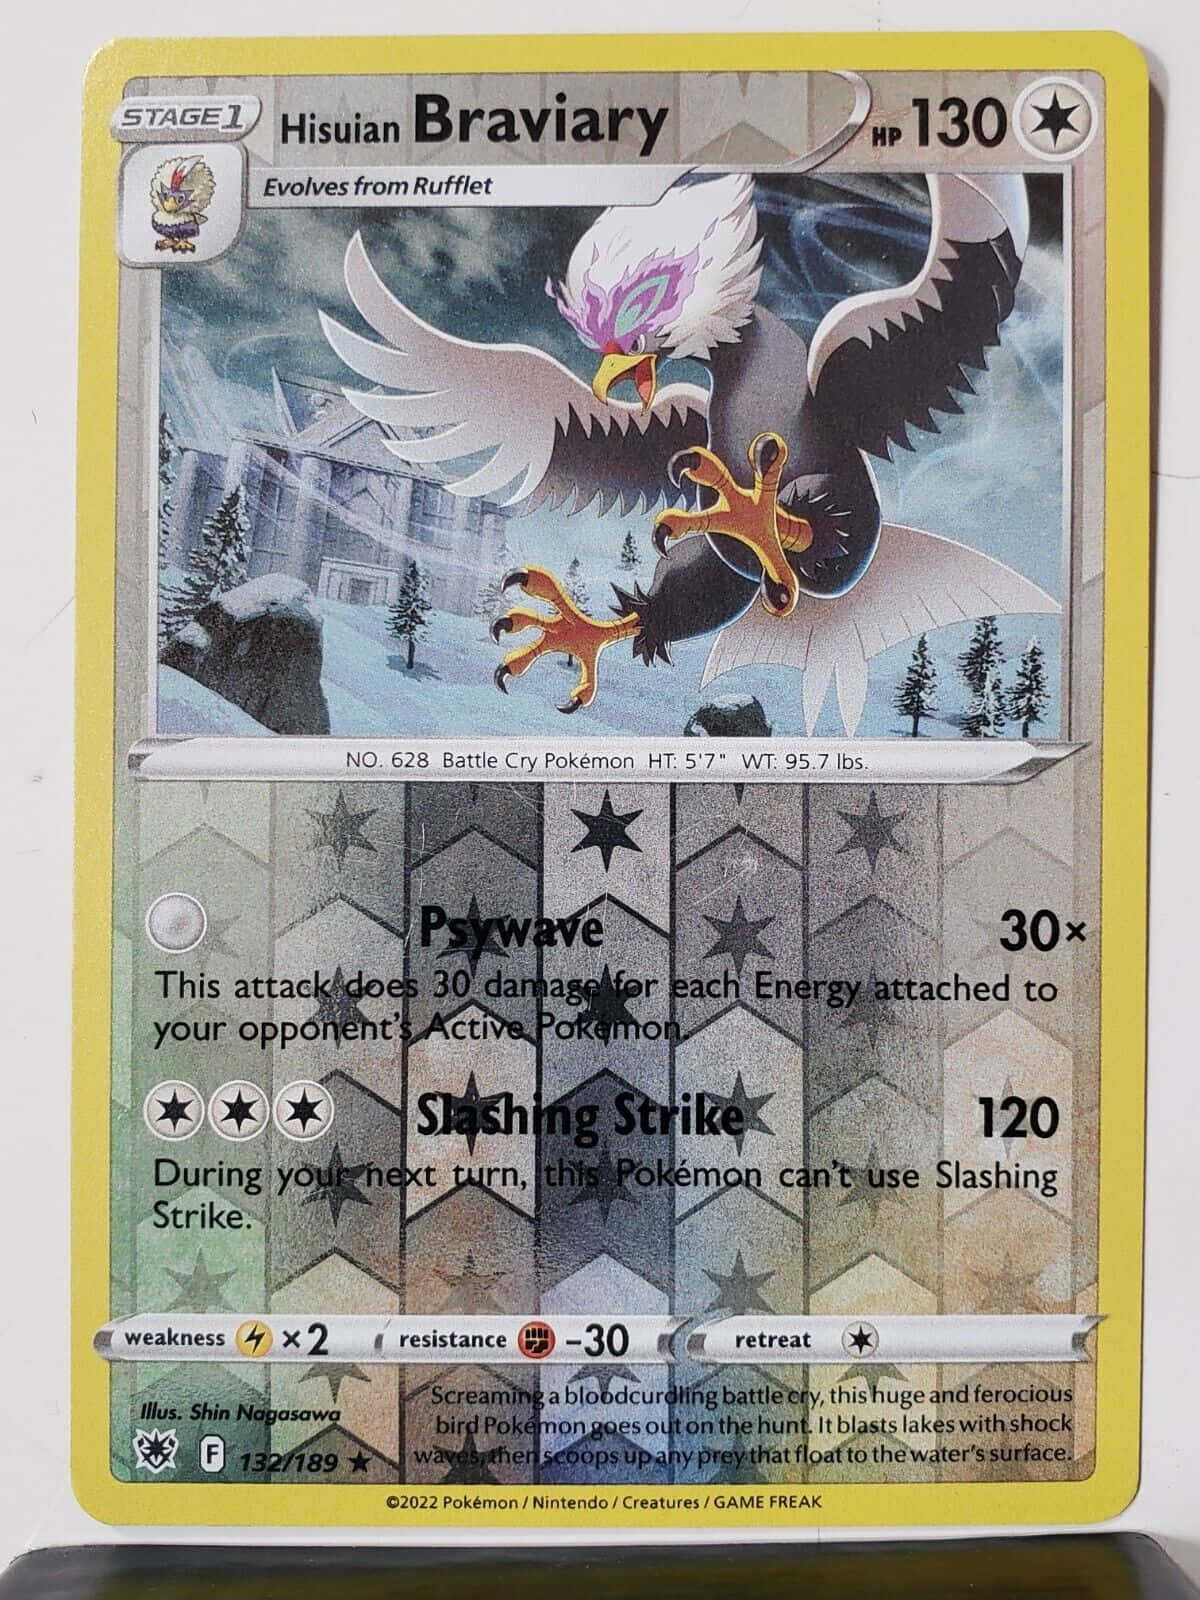 Hisuian Braviary Pokémon Card Wallpaper